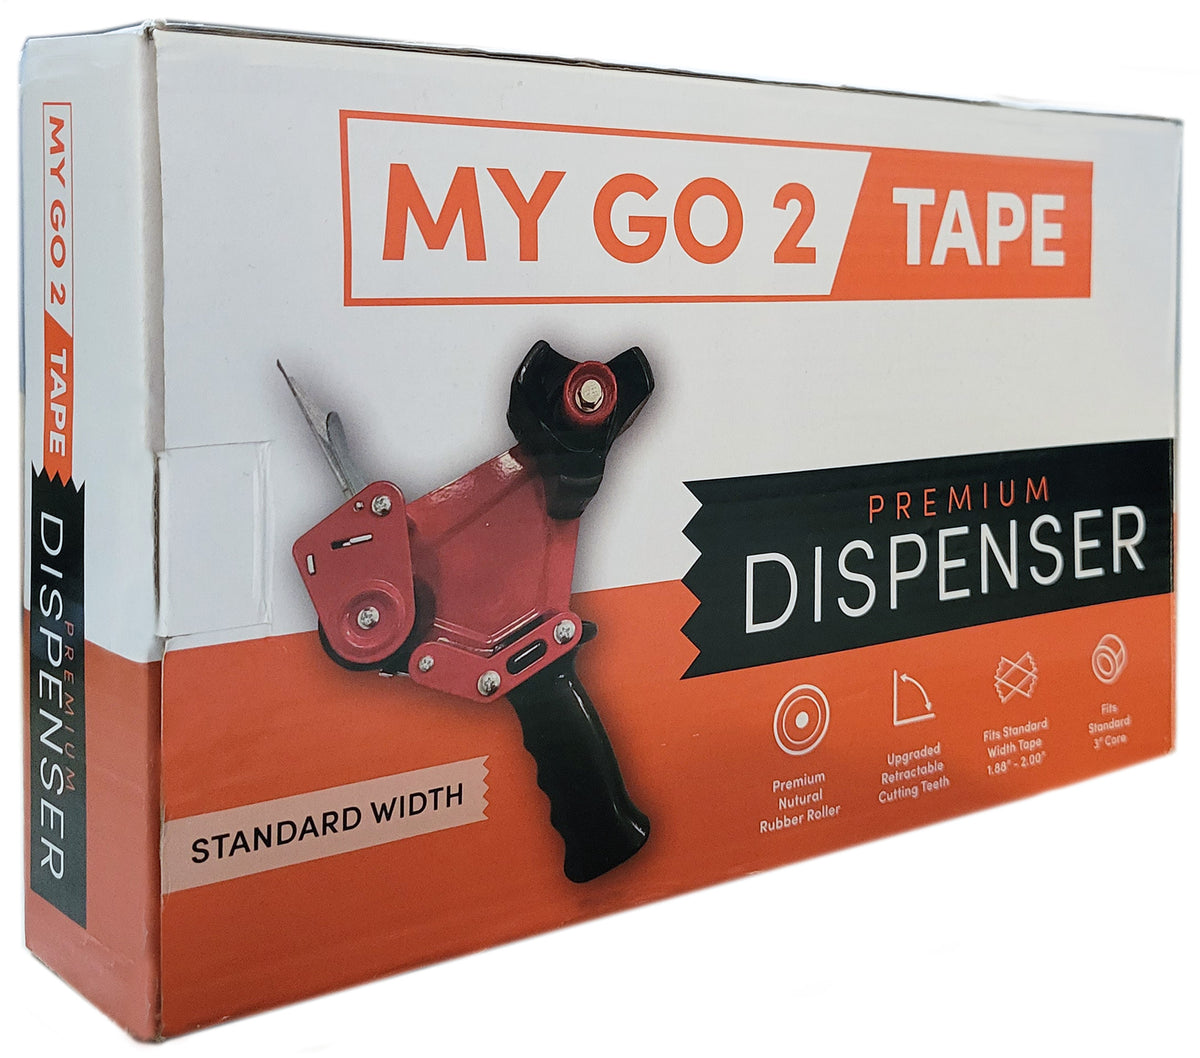 2 Inch Wide Manual Tape Dispenser